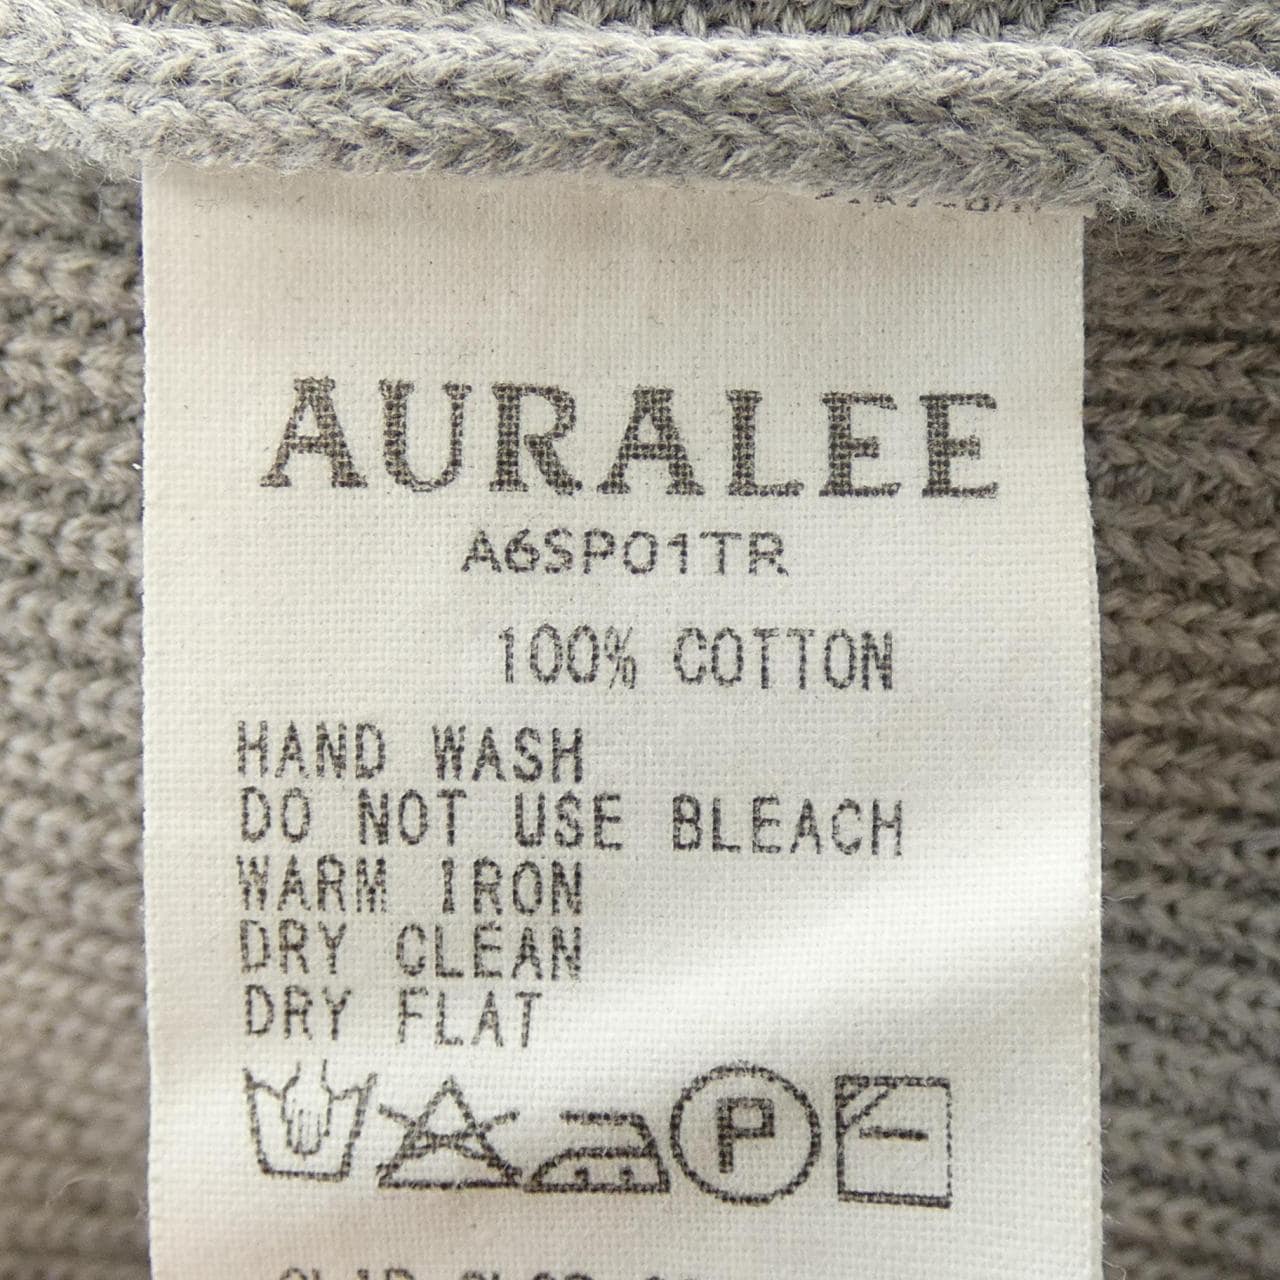 Orrery AURALEE Knit